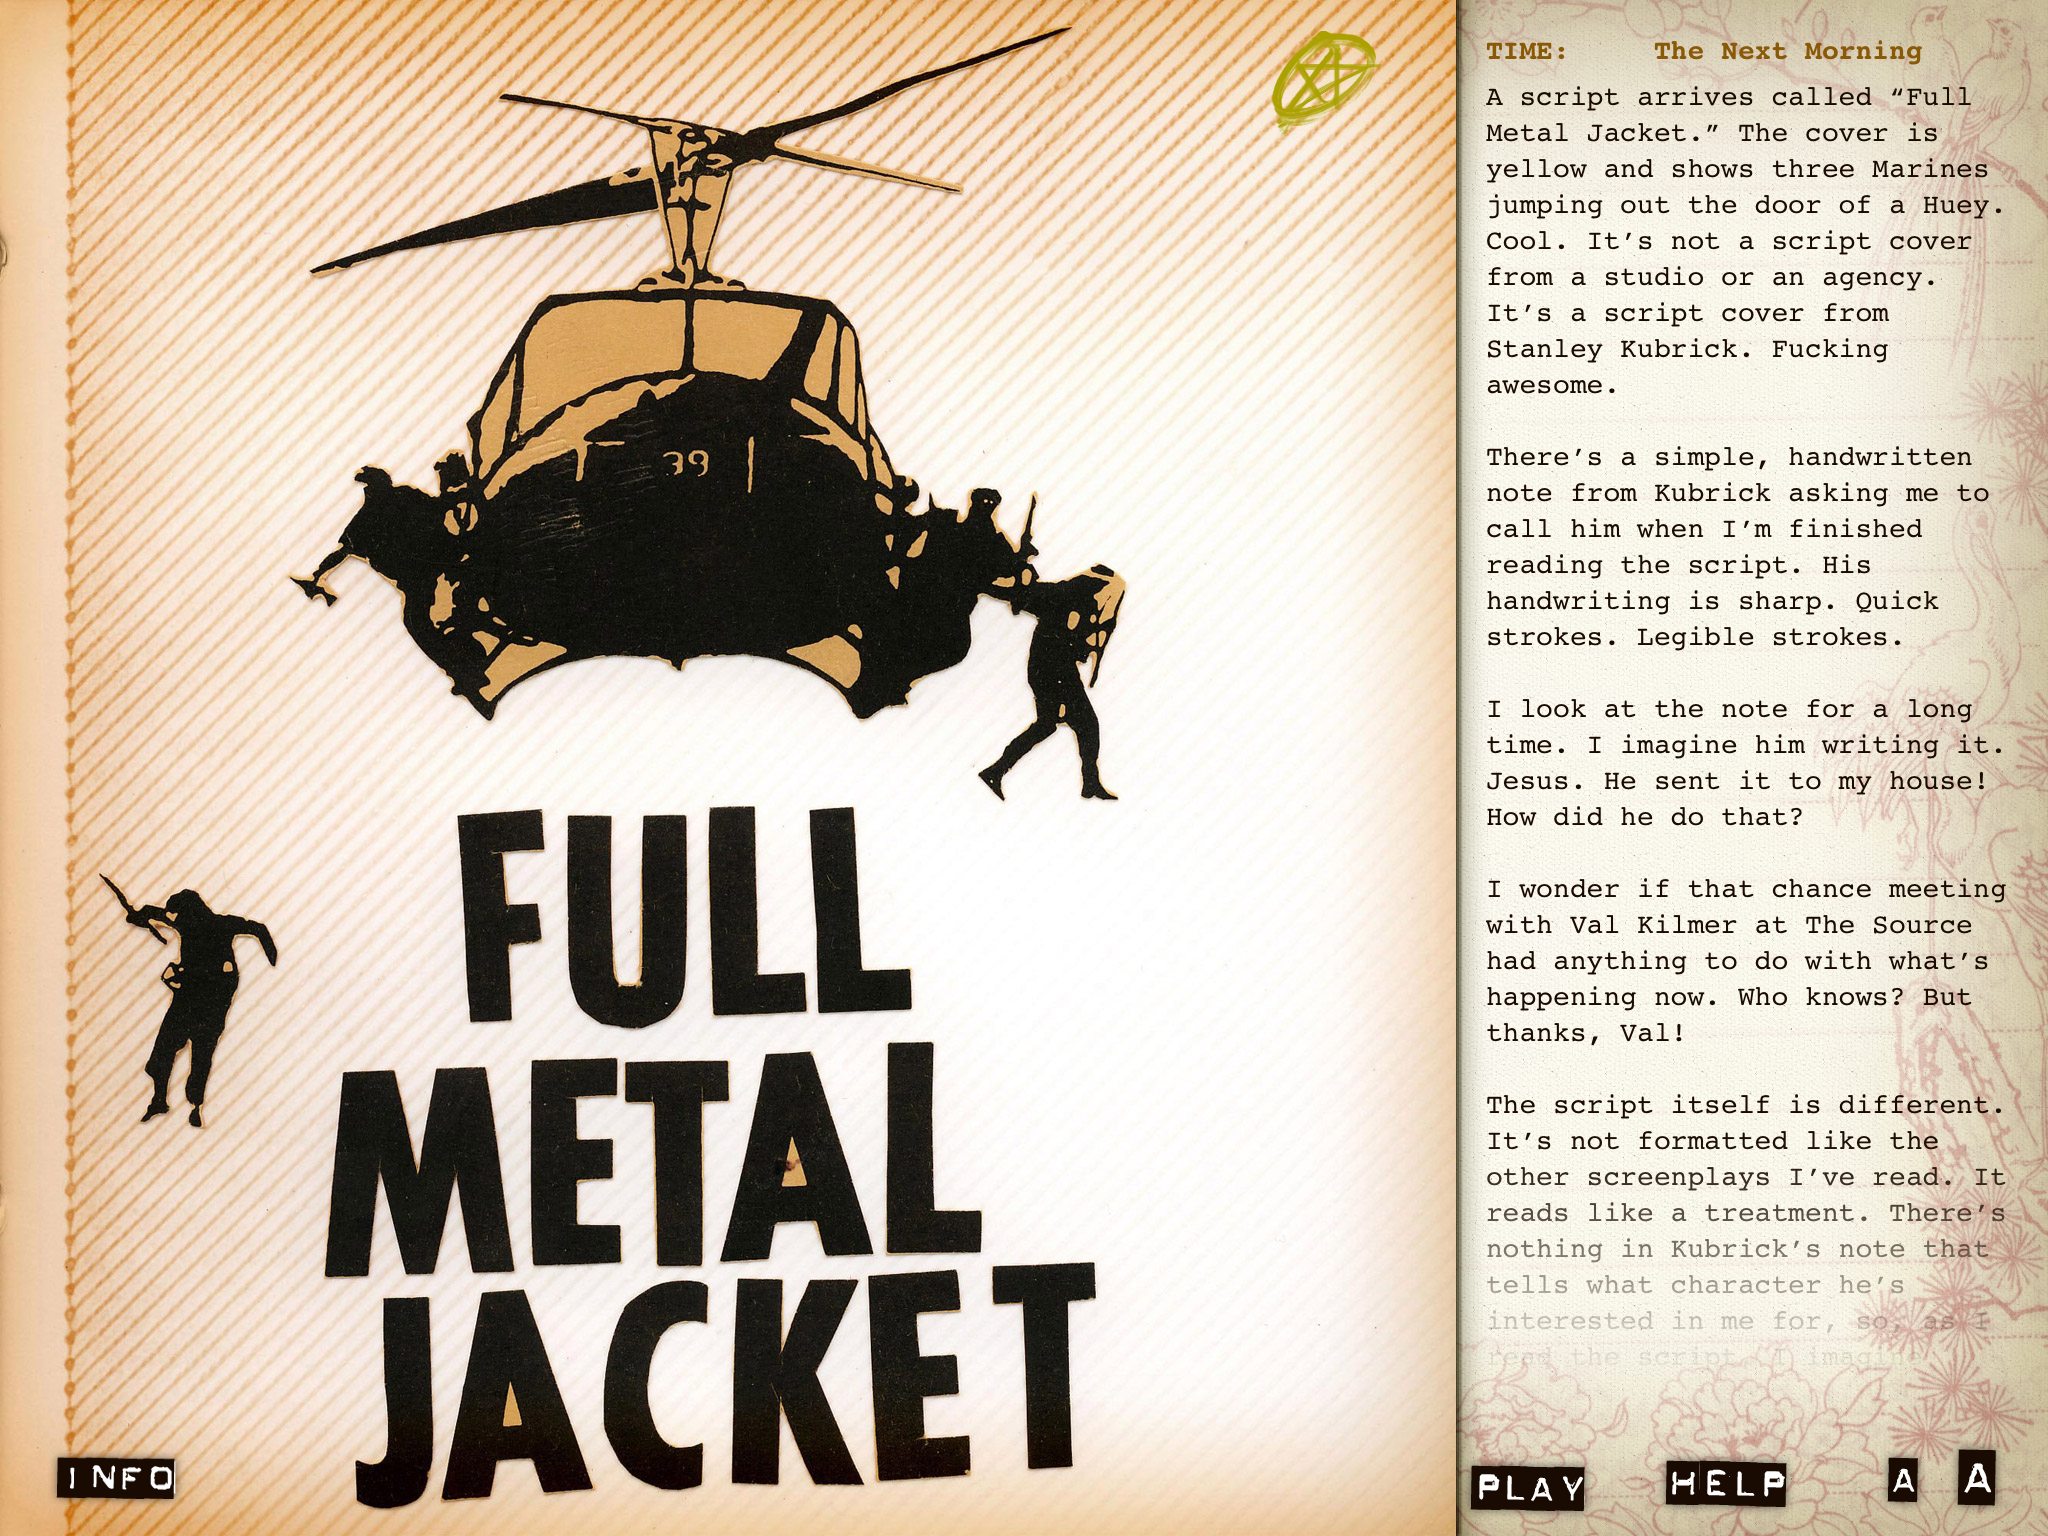 Full Metal Jacket app | WIRED